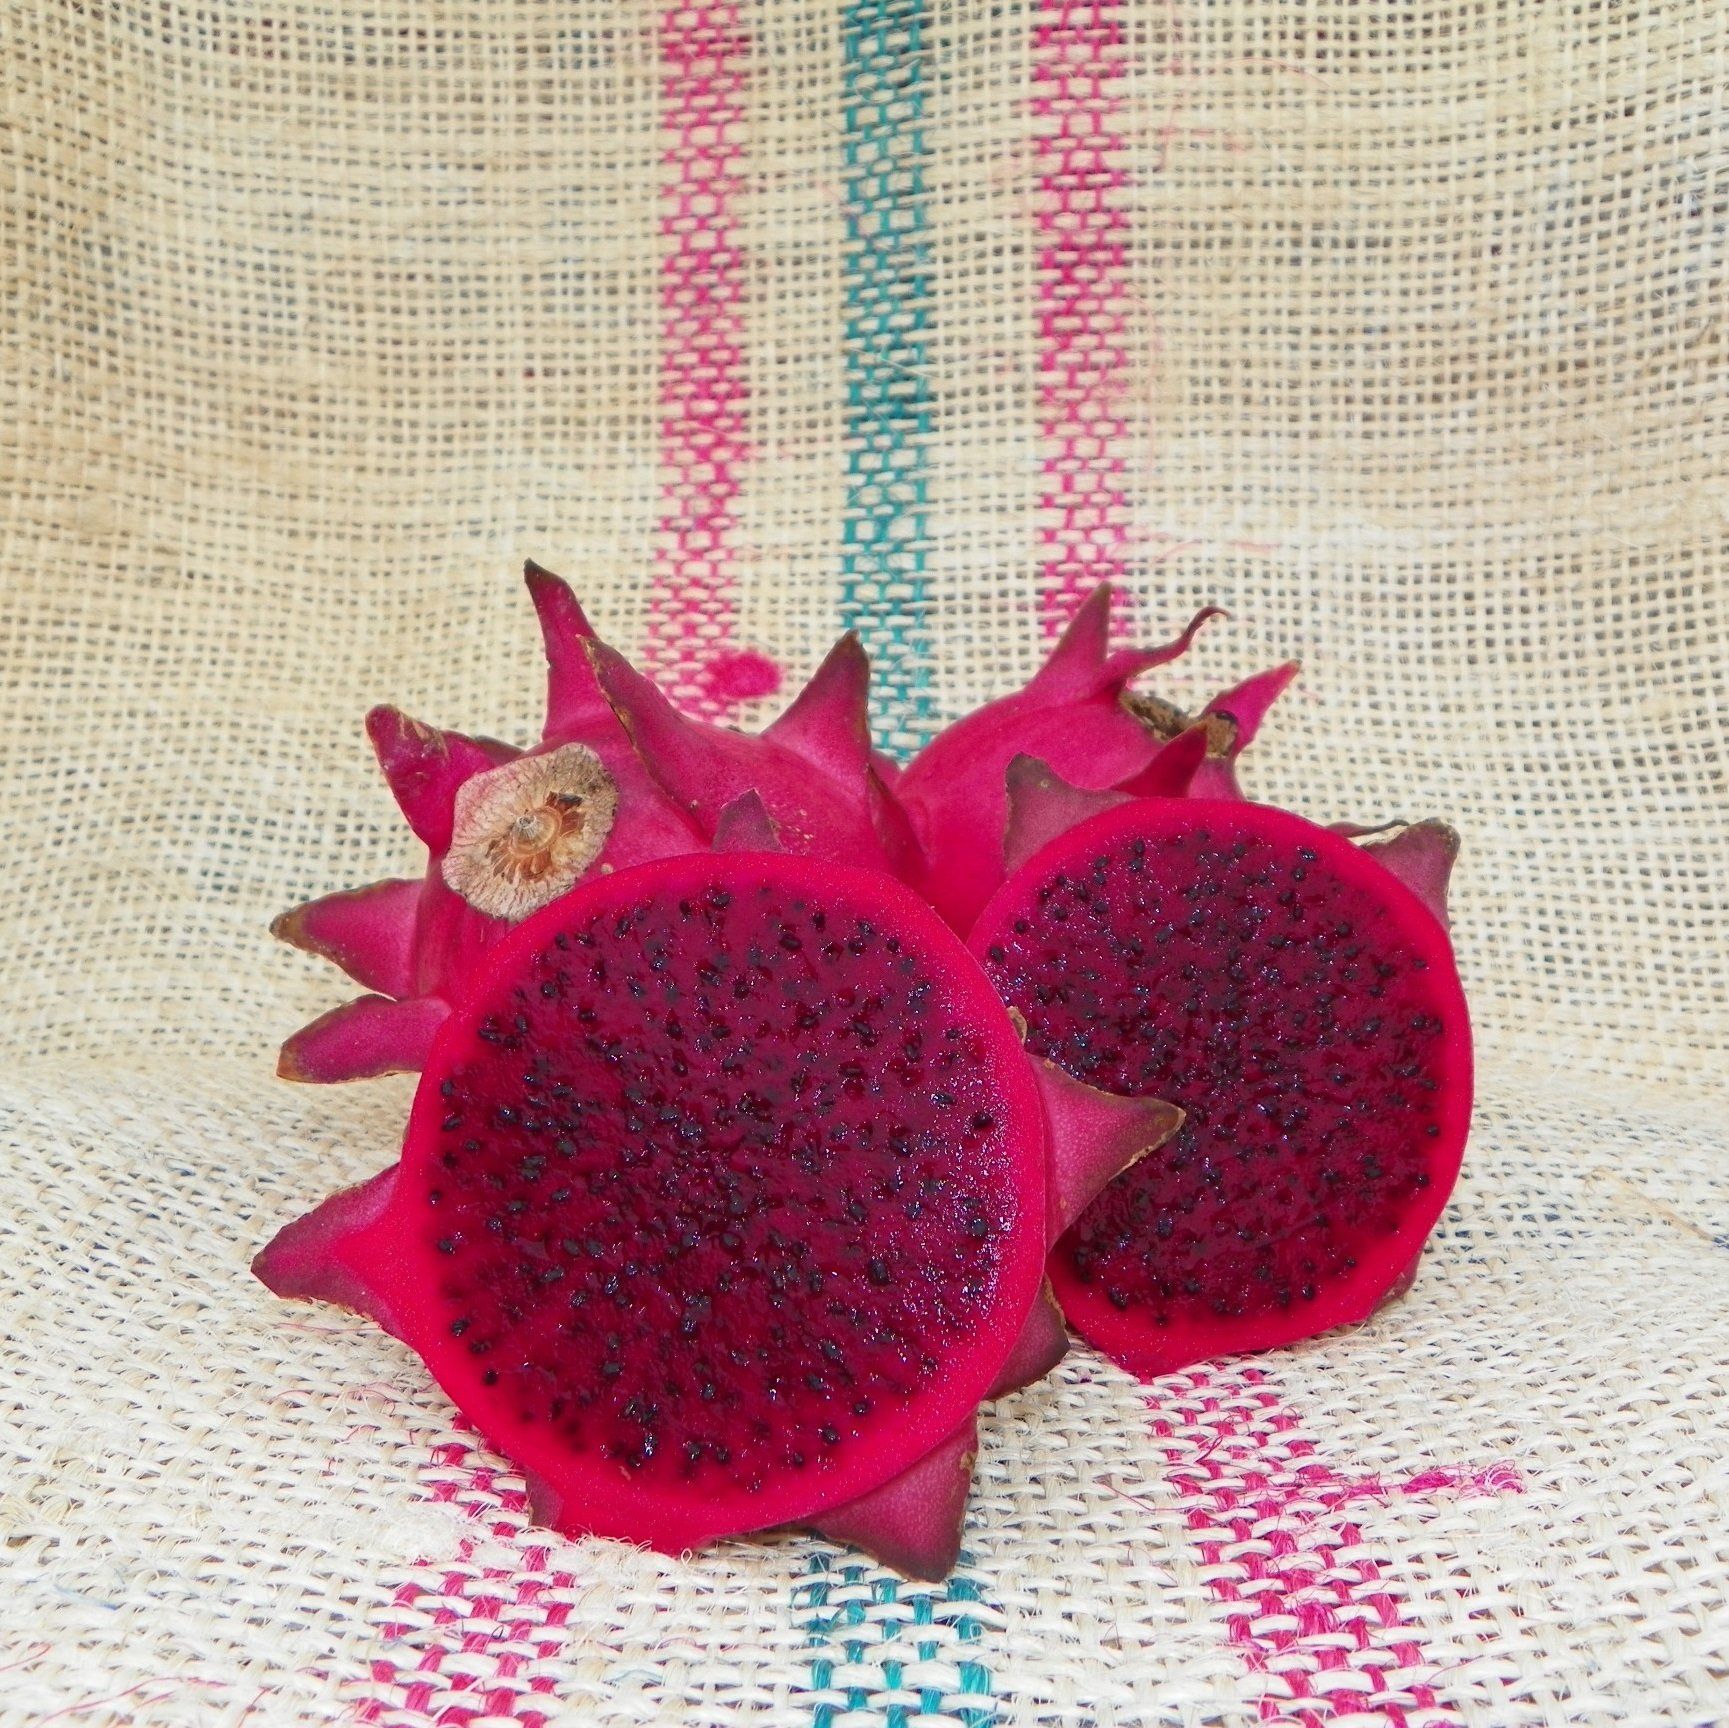 Orejona dragon fruit cut in half